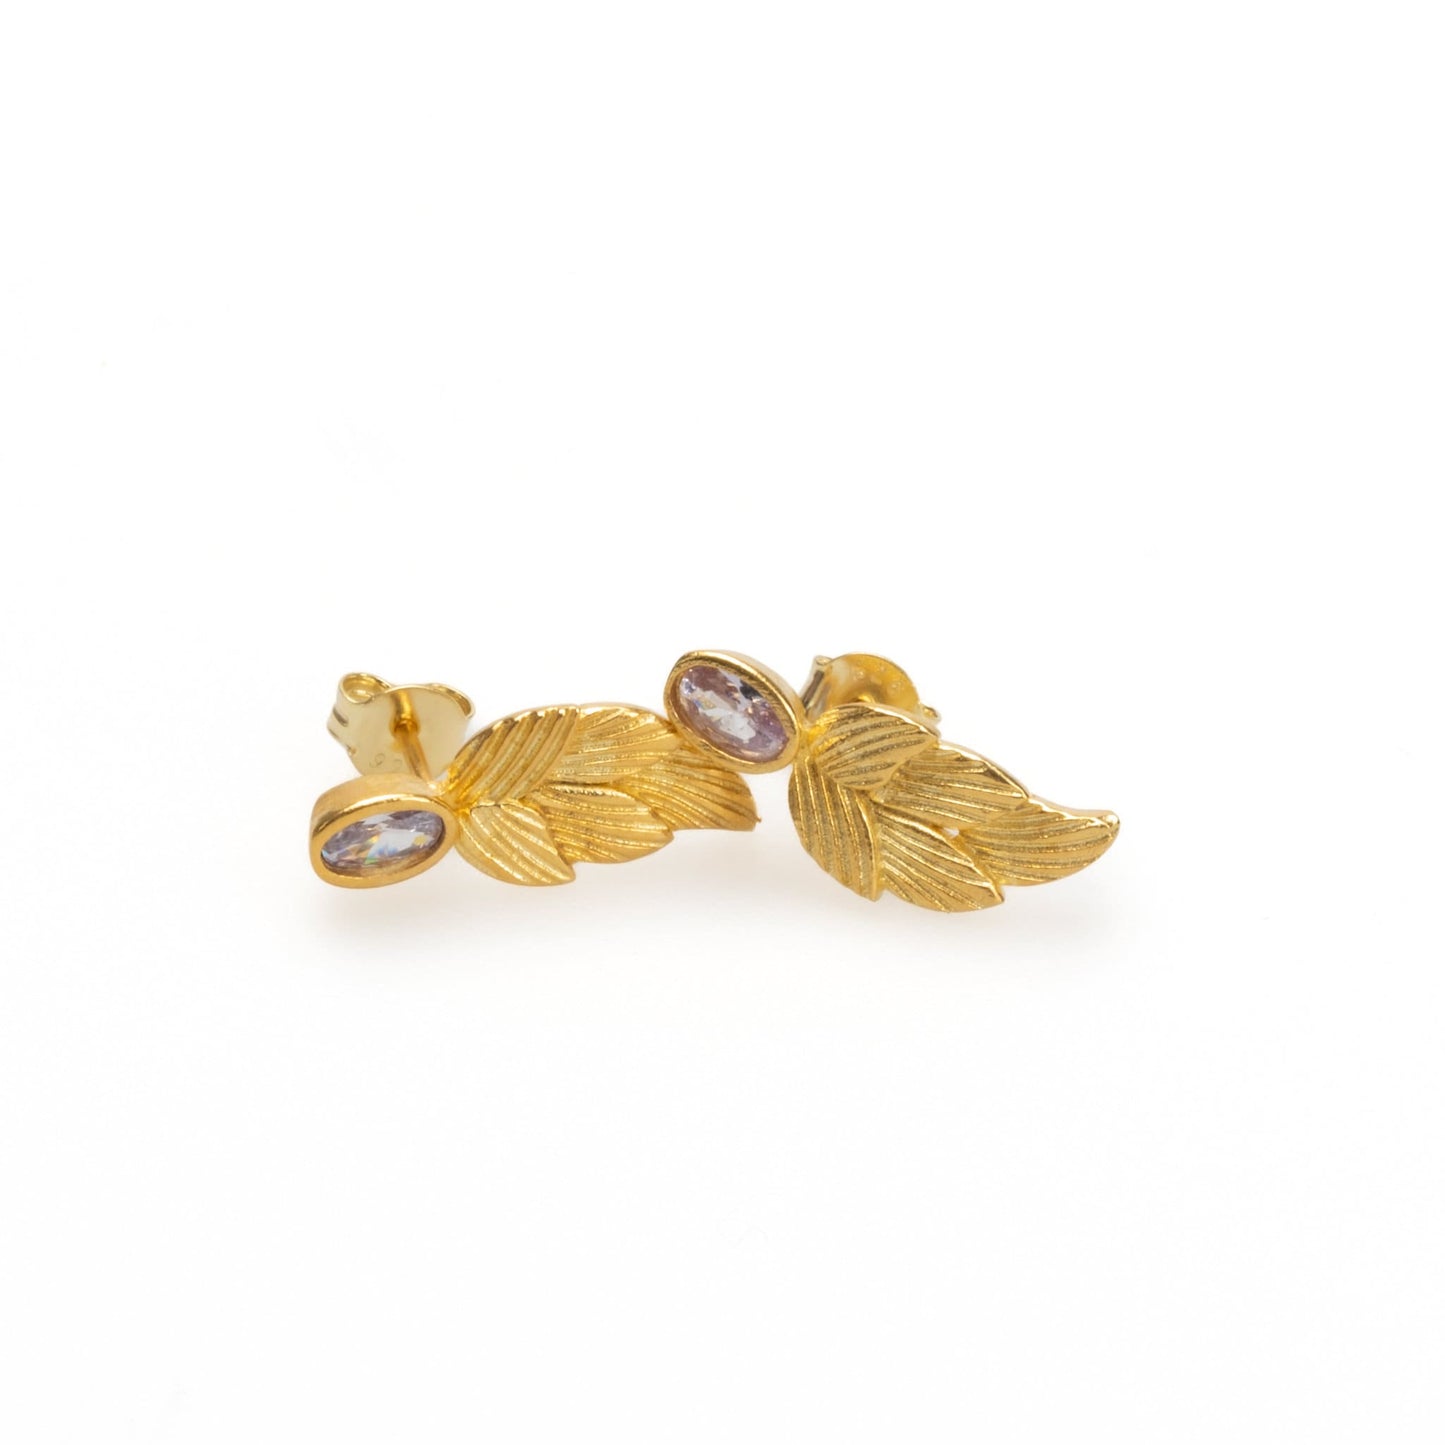 18k Gold Birthstone Leaf Earrings, Alexandrite June Birthstone